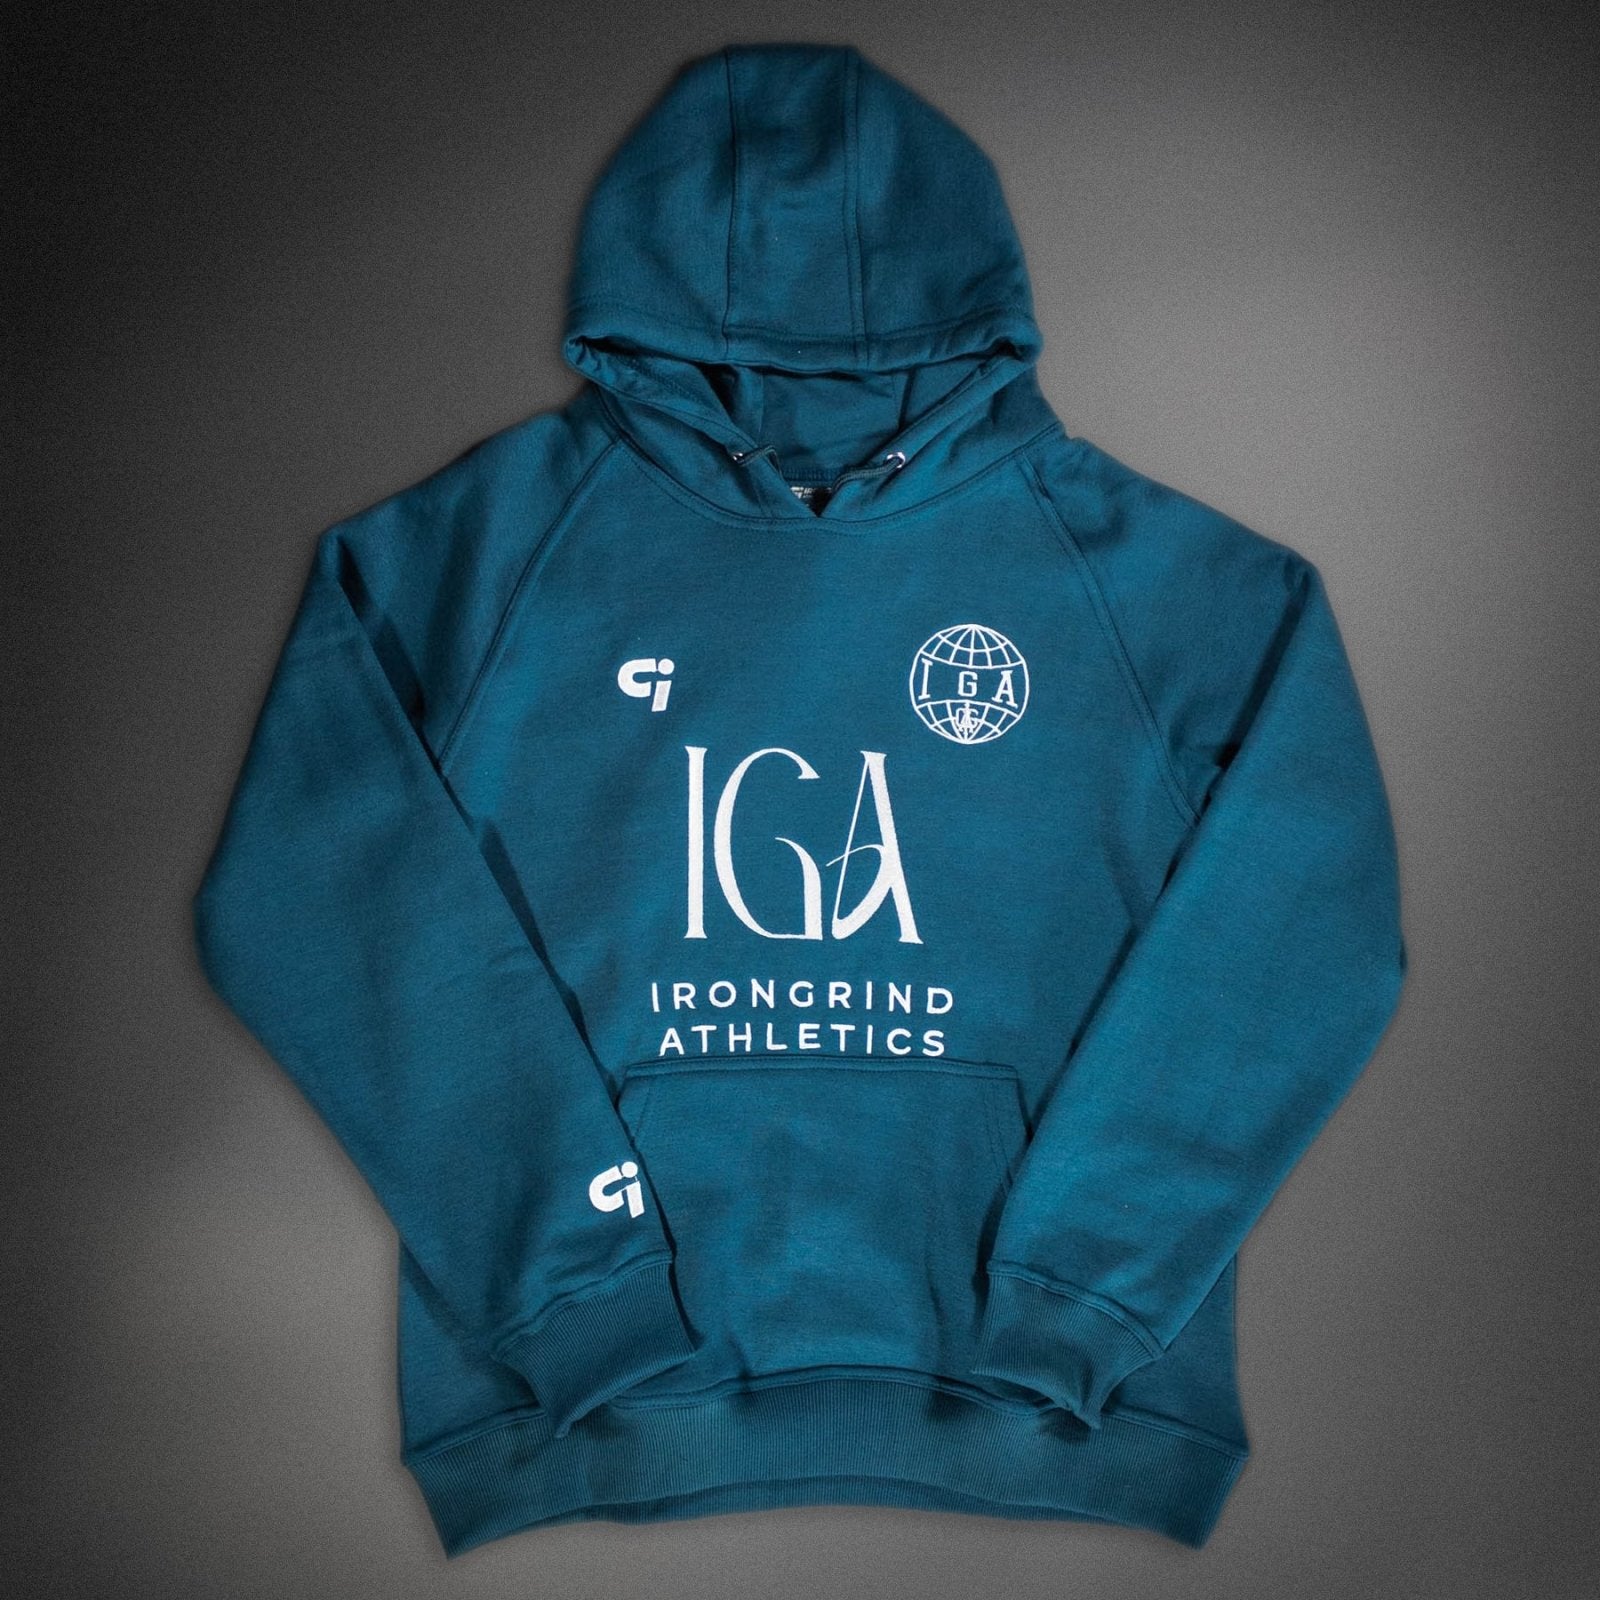 Prevail 'IGA' Raglan Embroidered Hoodie - IronGrind Athletics - activewear - gymshark - alphalete